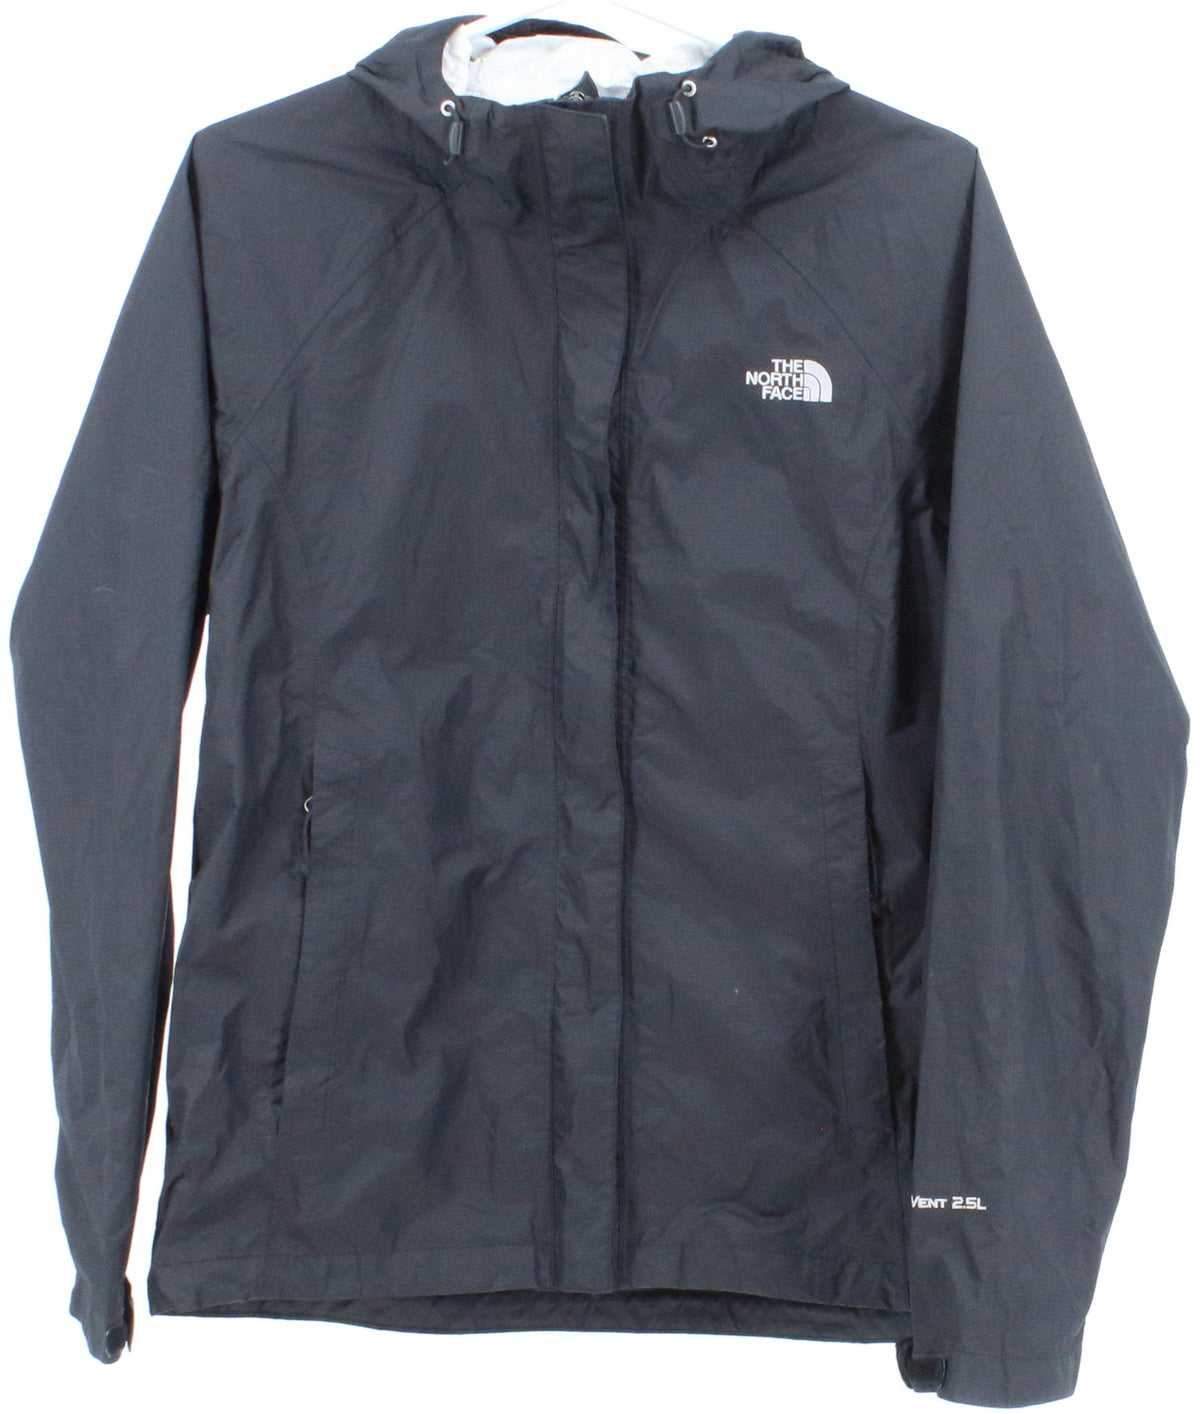 The North Face HyVent 2.5L Black Nylon Jacket